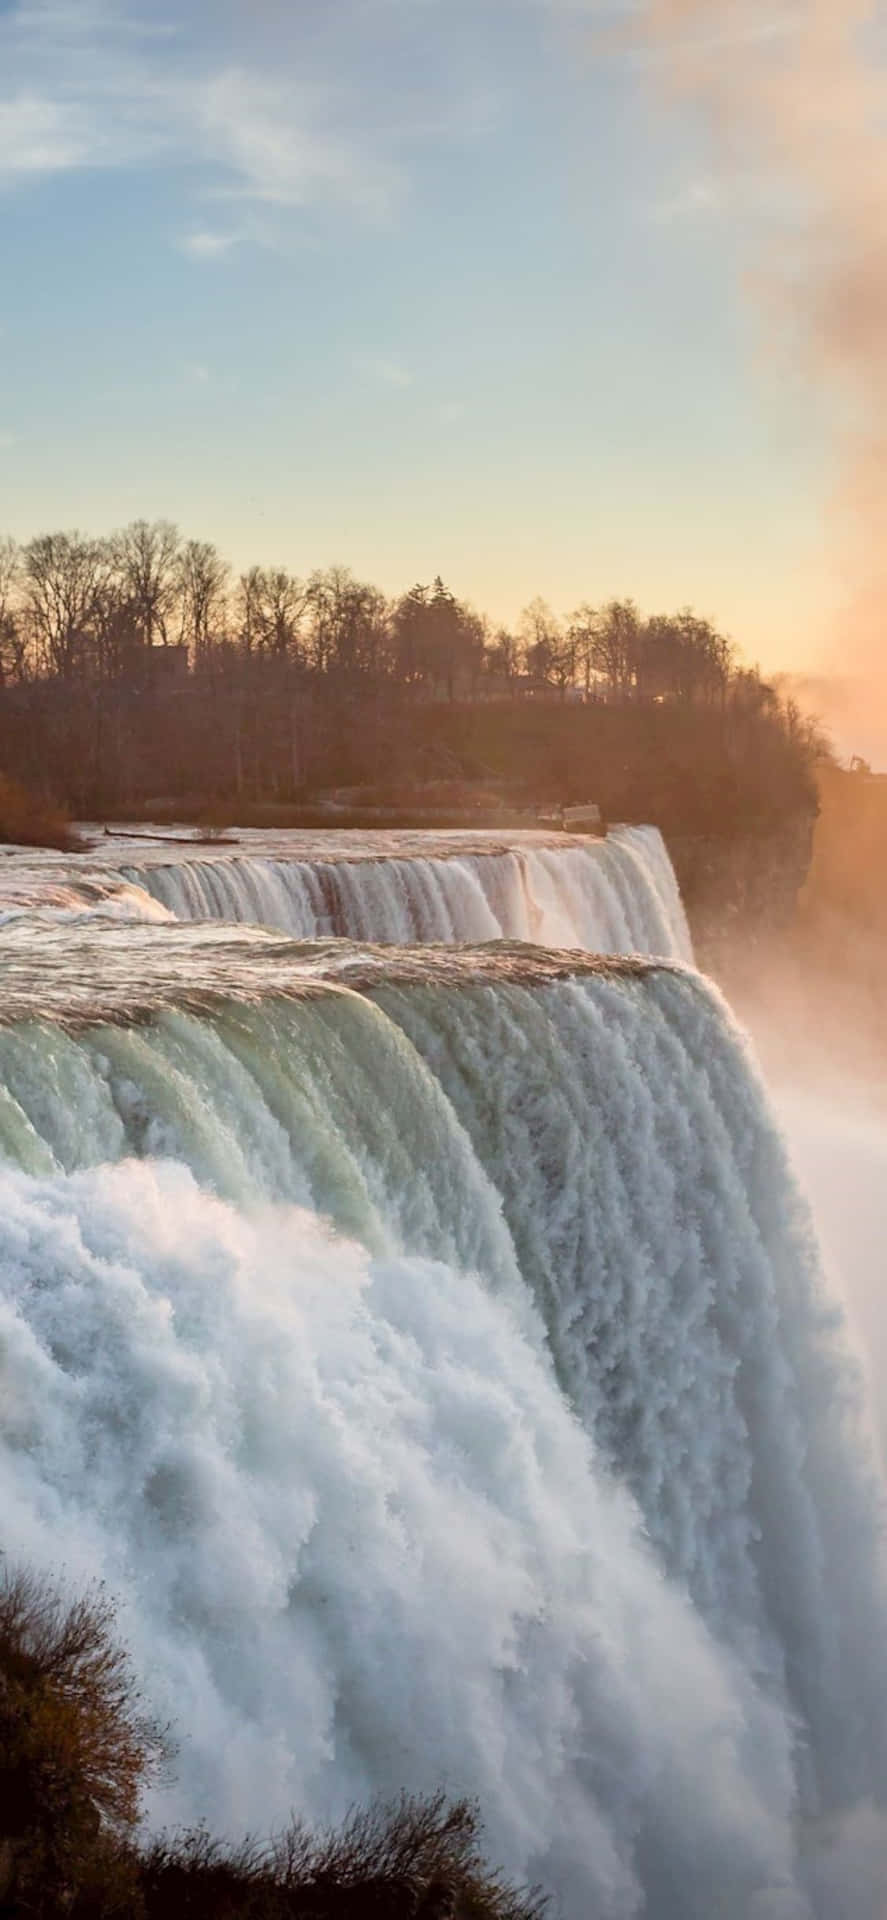 iPhone X Niagara Falls Tourist Spots Background